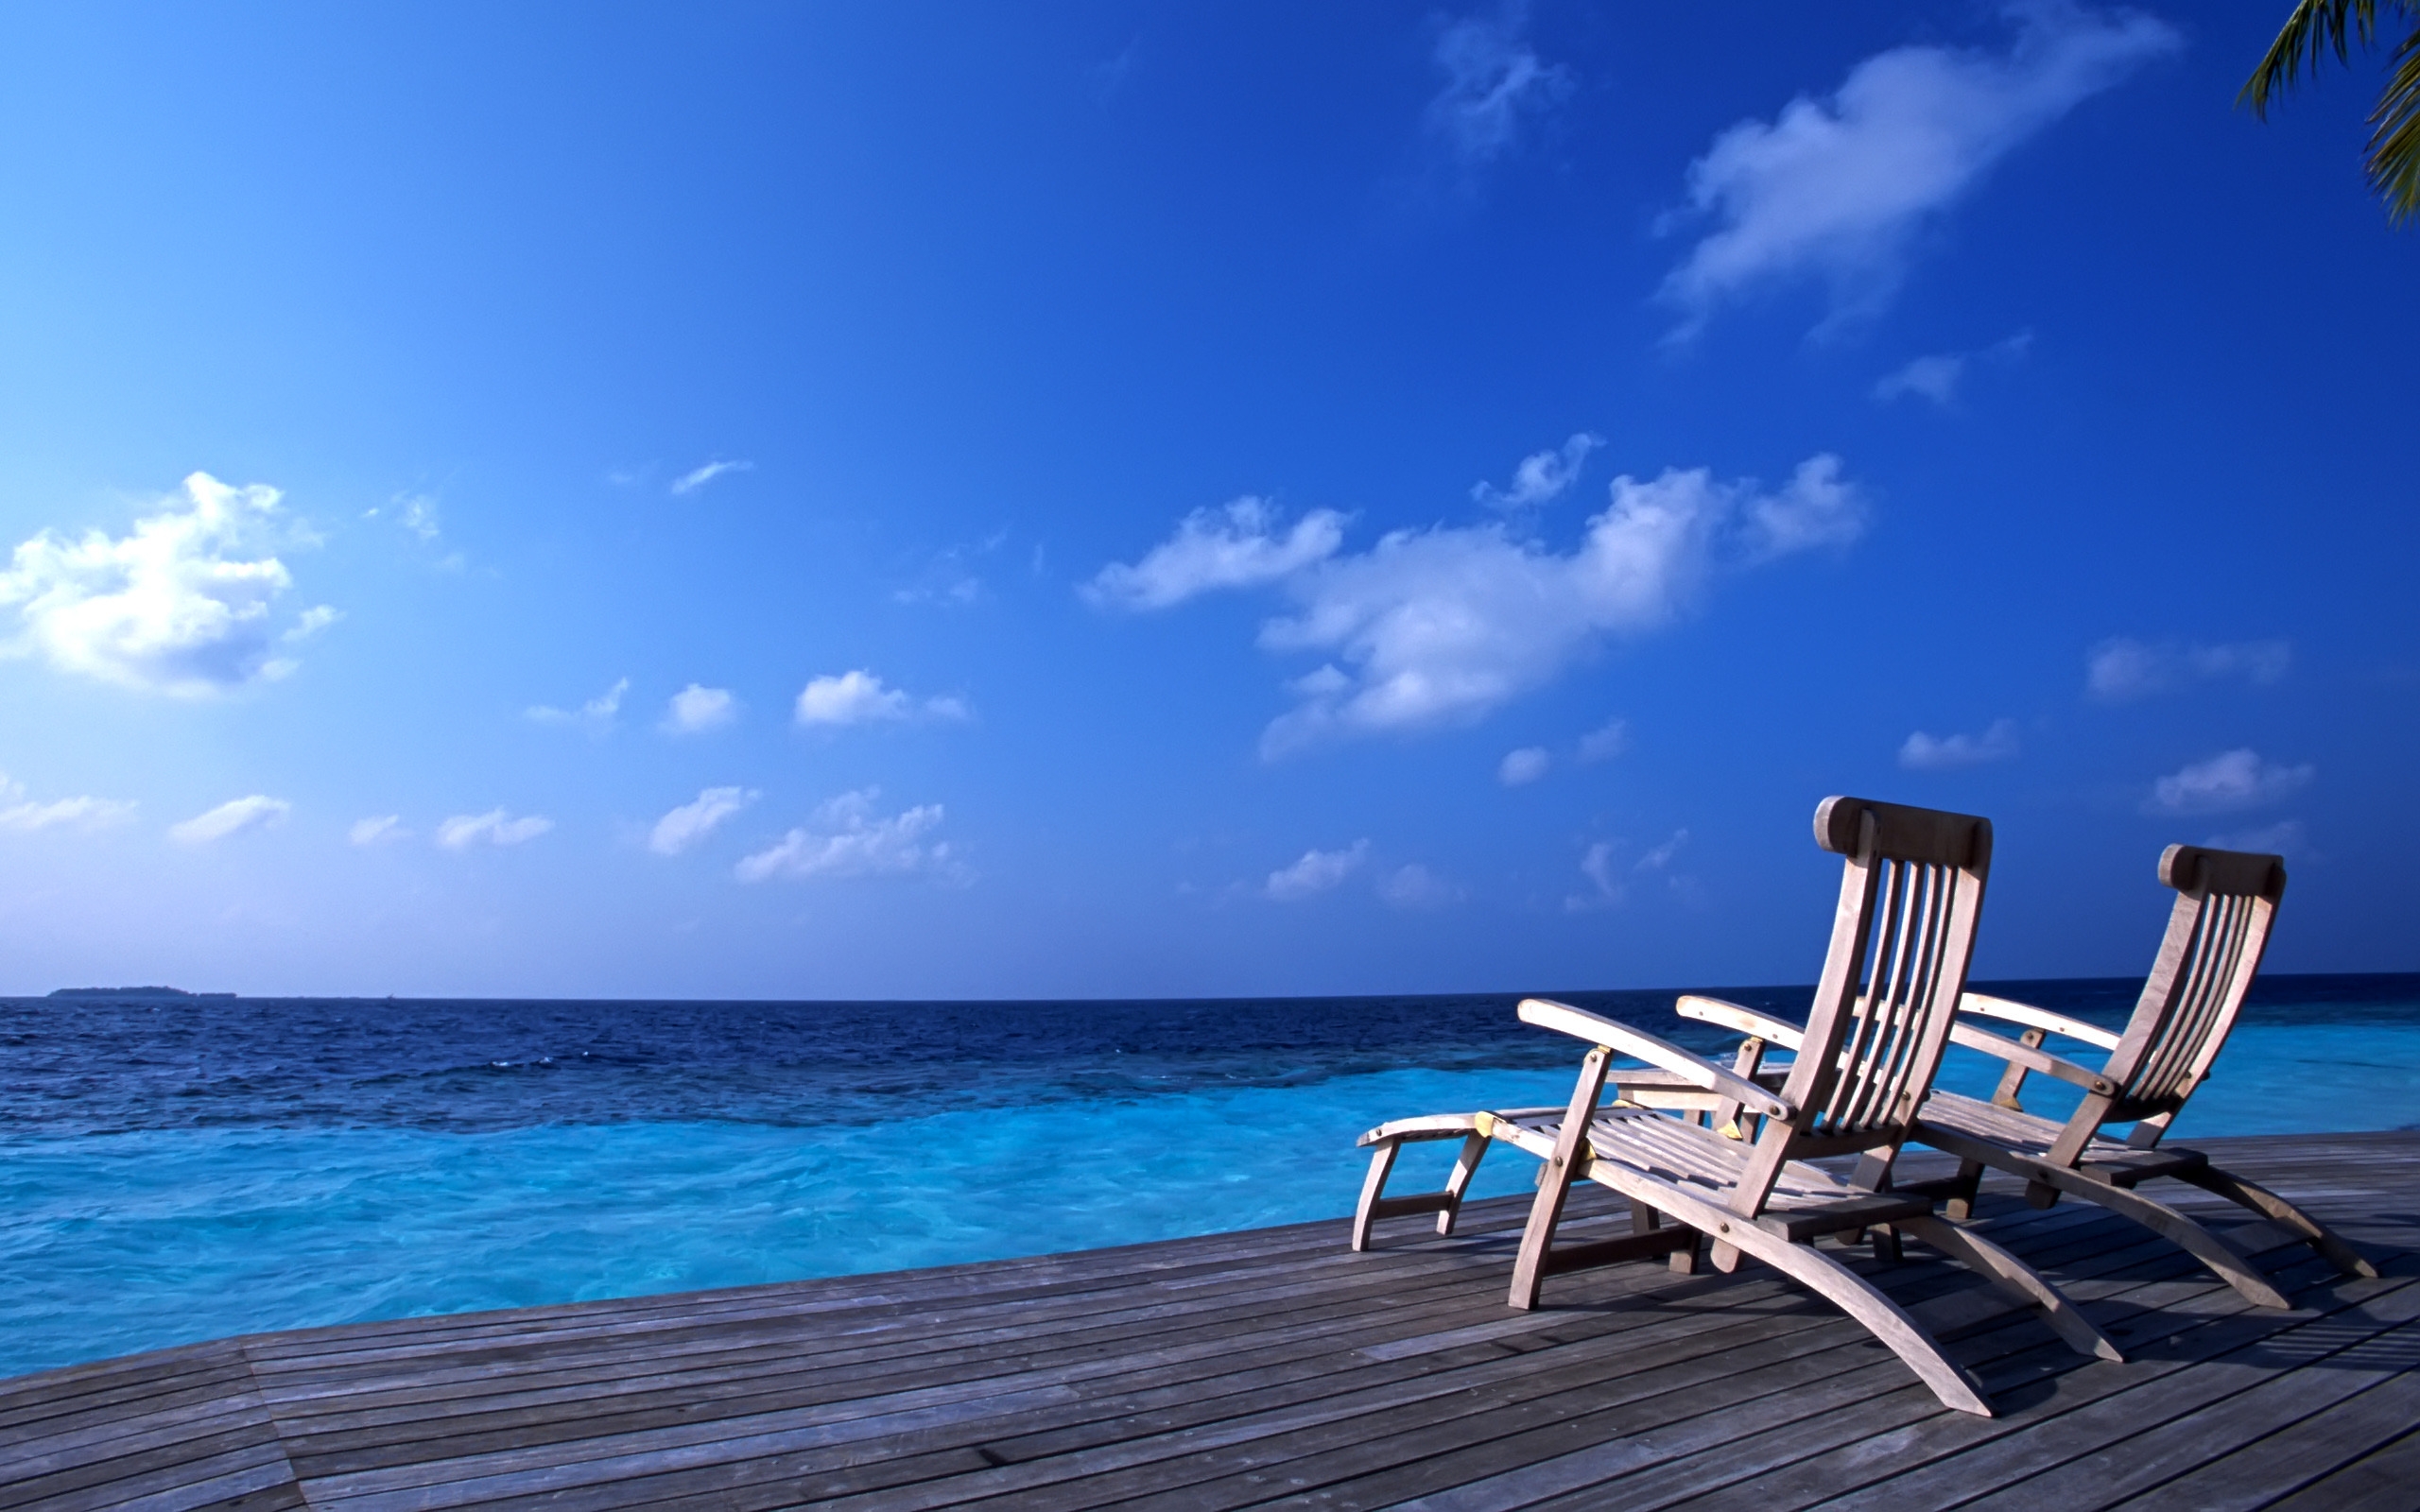 Maldives Beach for 2560 x 1600 widescreen resolution